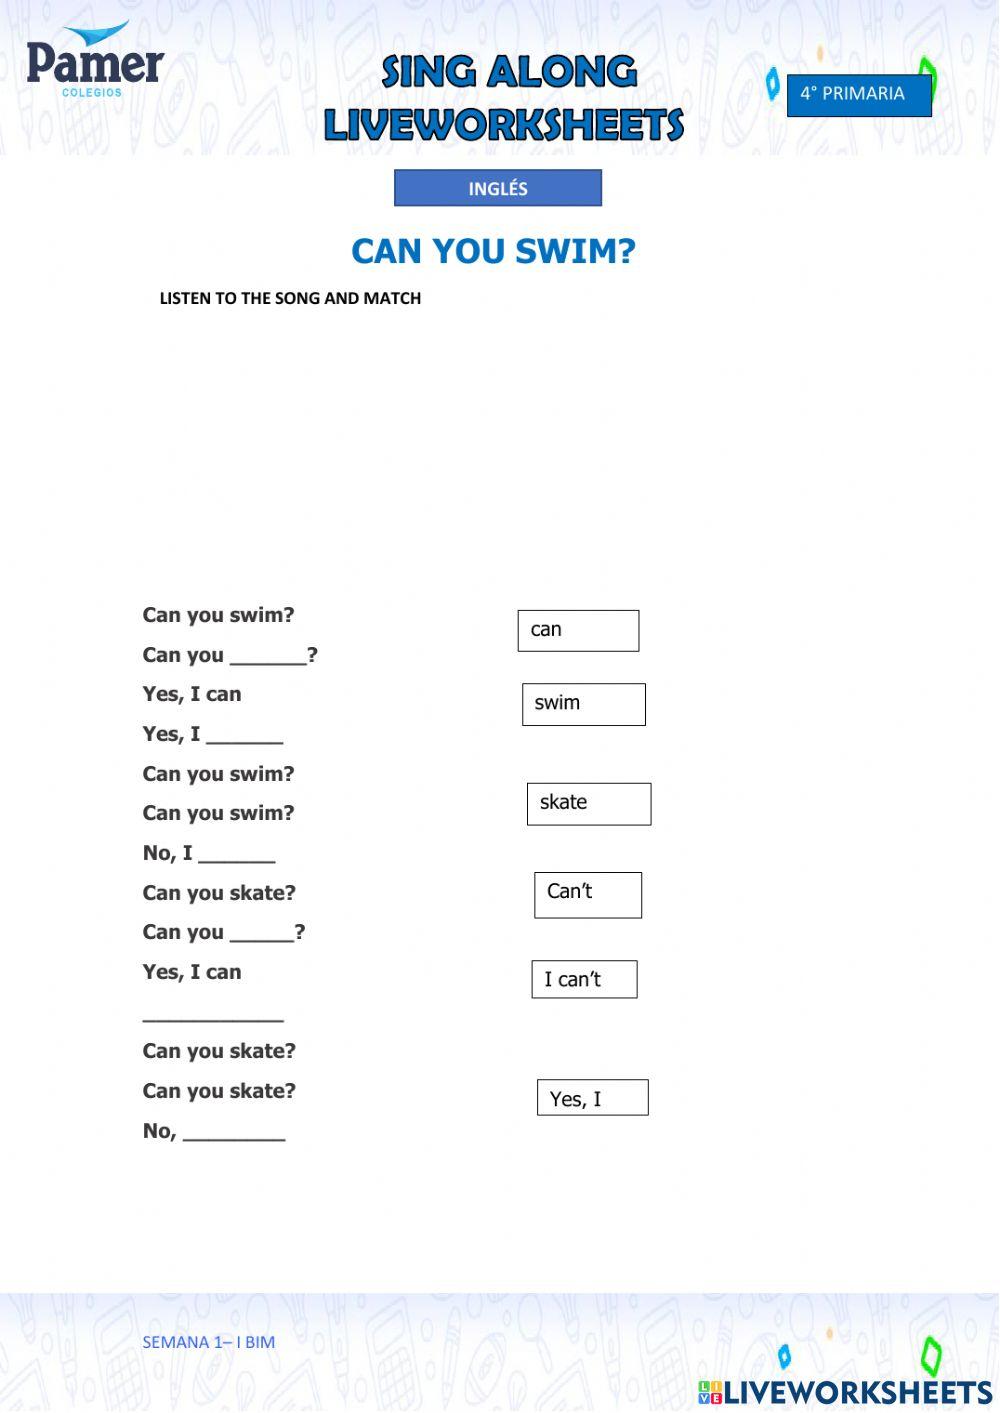 Can you swim